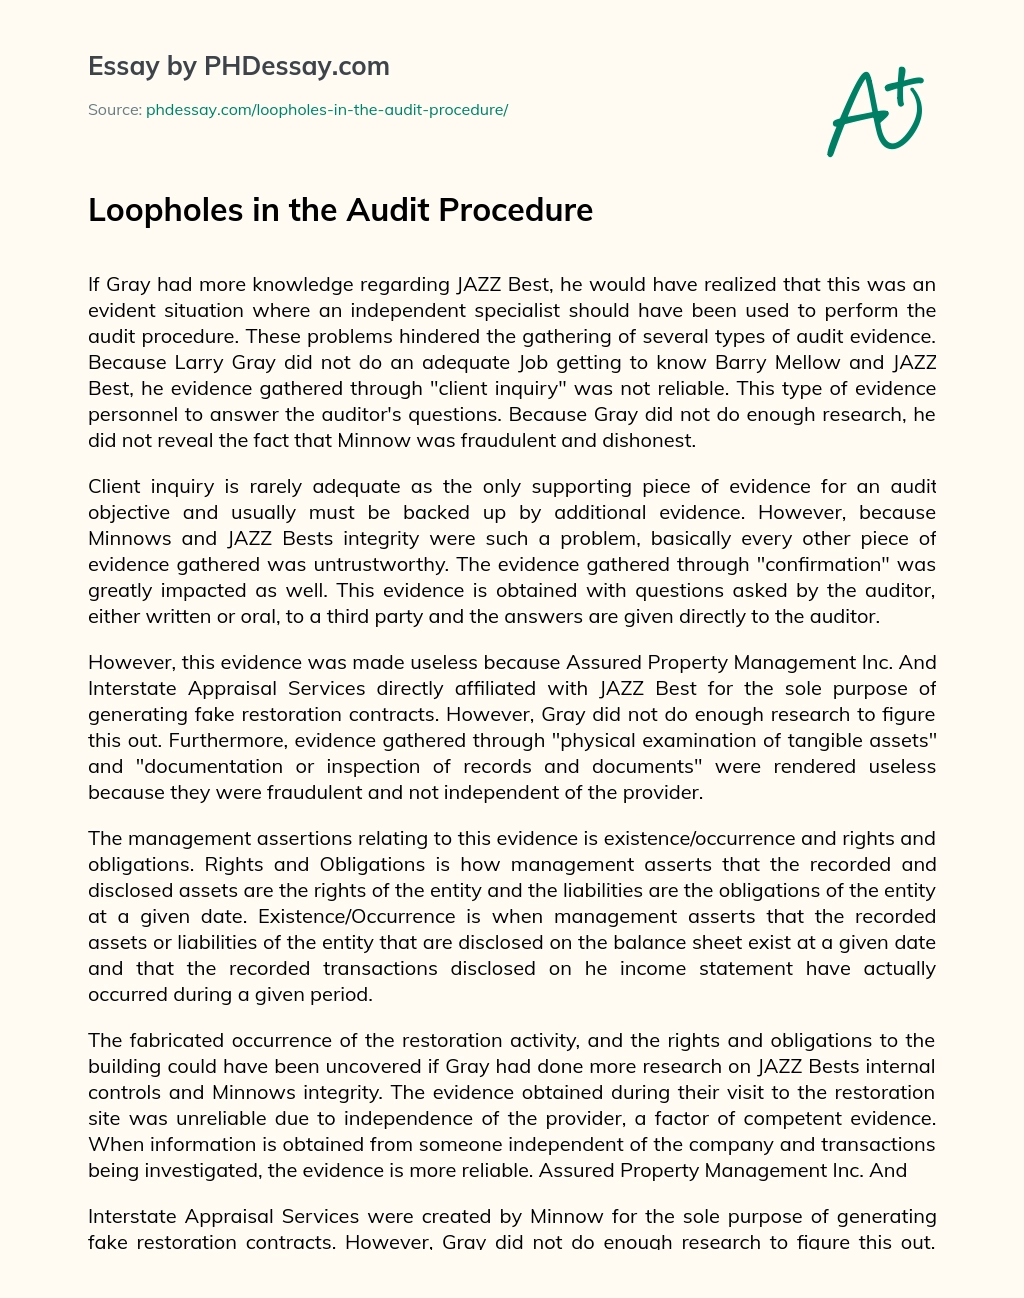 Loopholes in the Audit Procedure essay